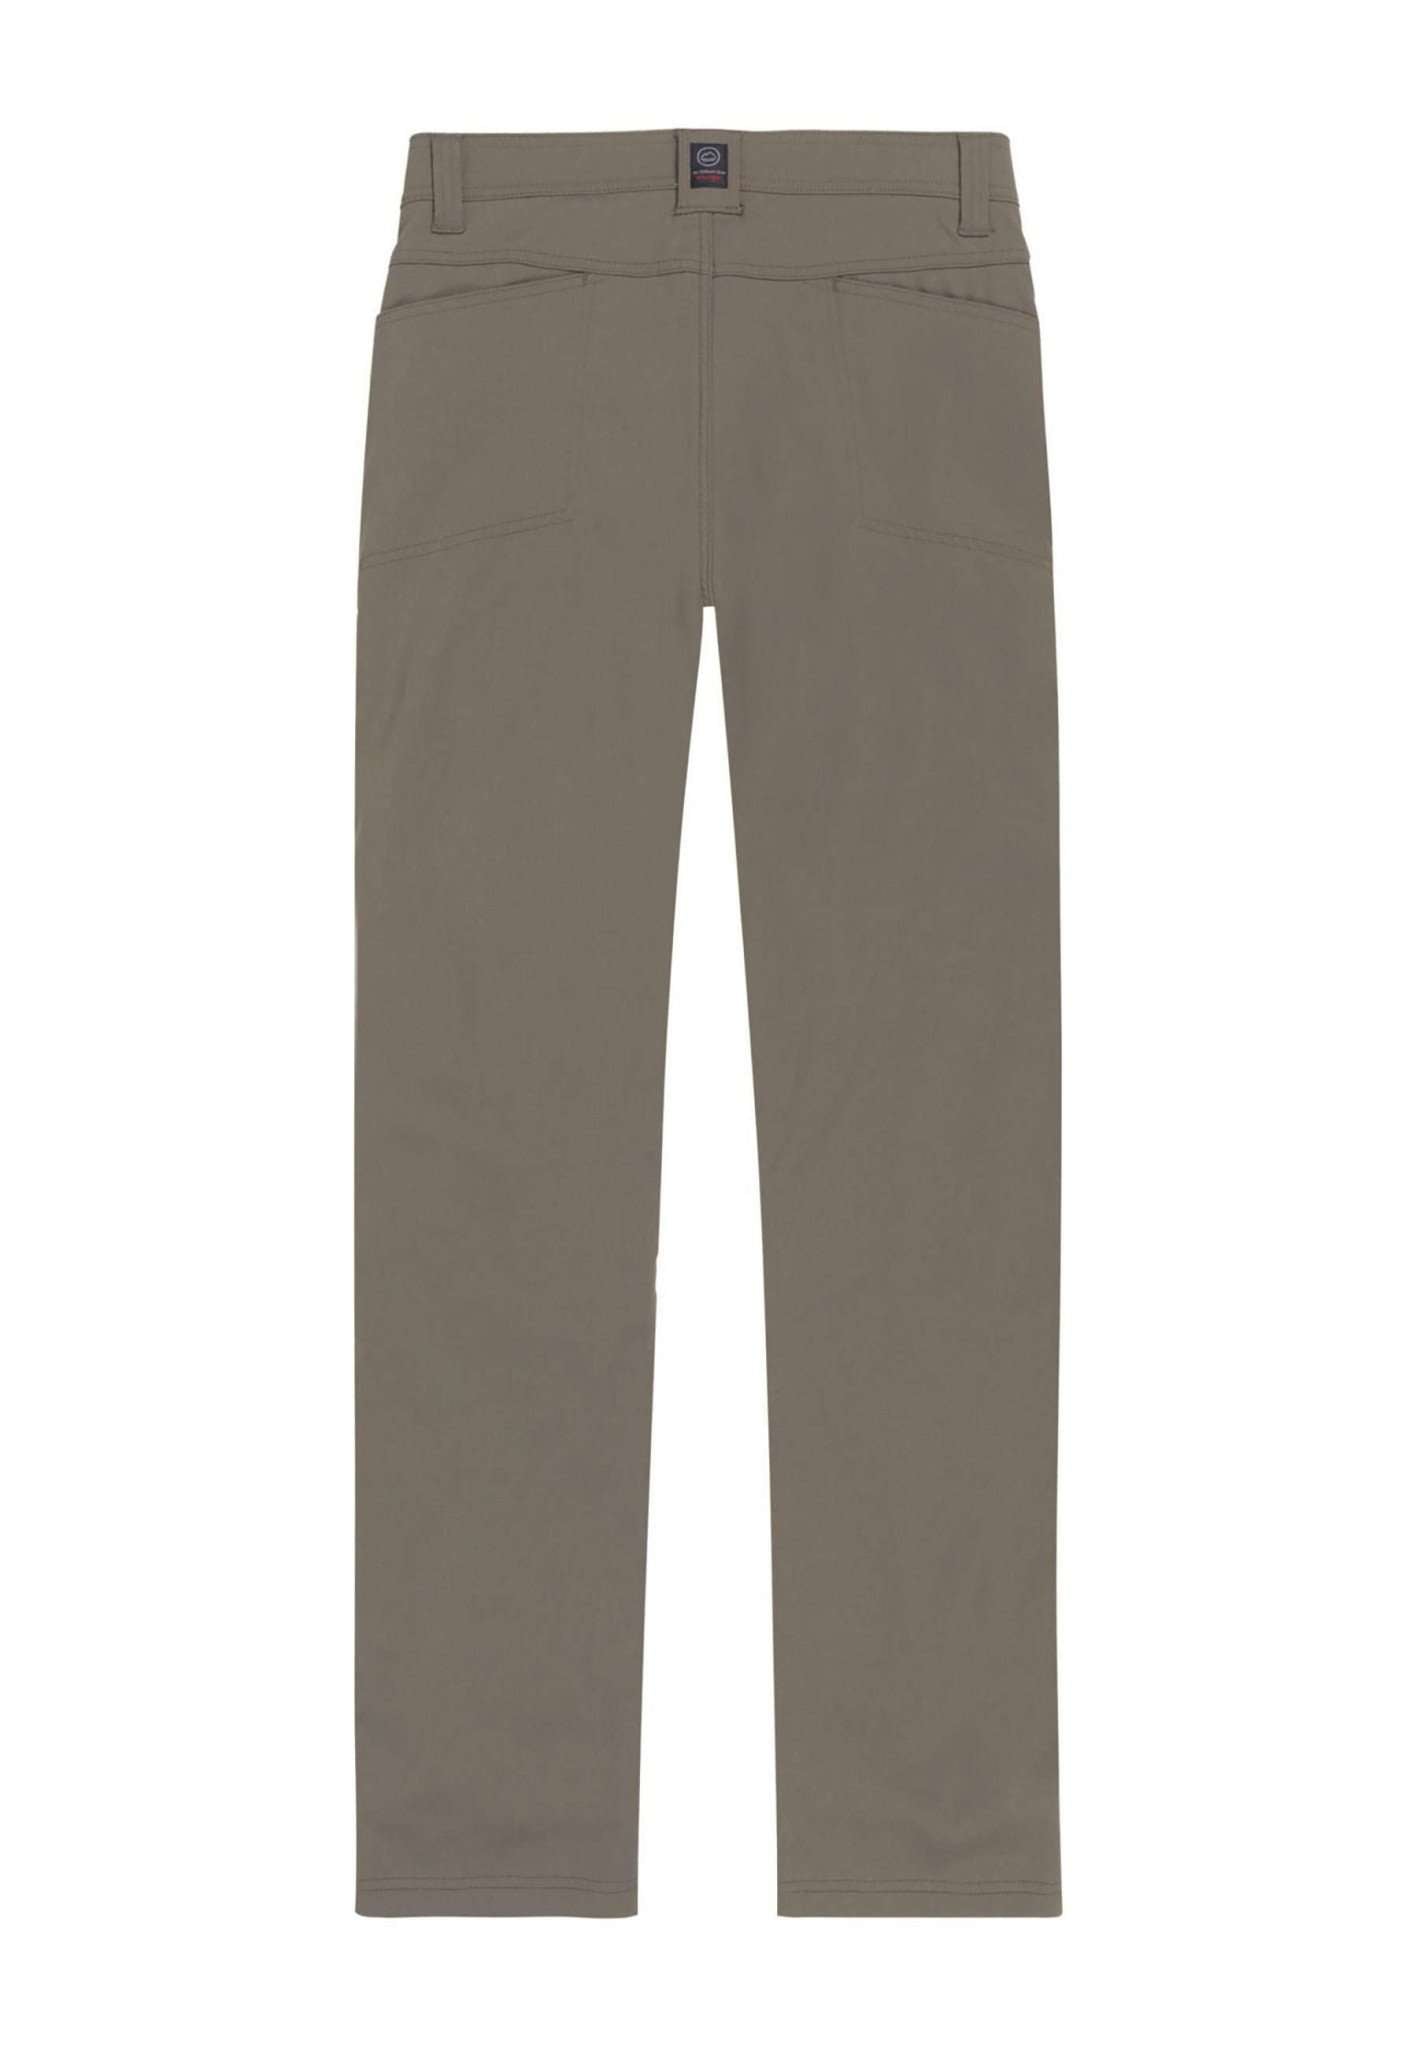 Fleece Lined Utility Pant in Bungee Cord Hosen Wrangler   